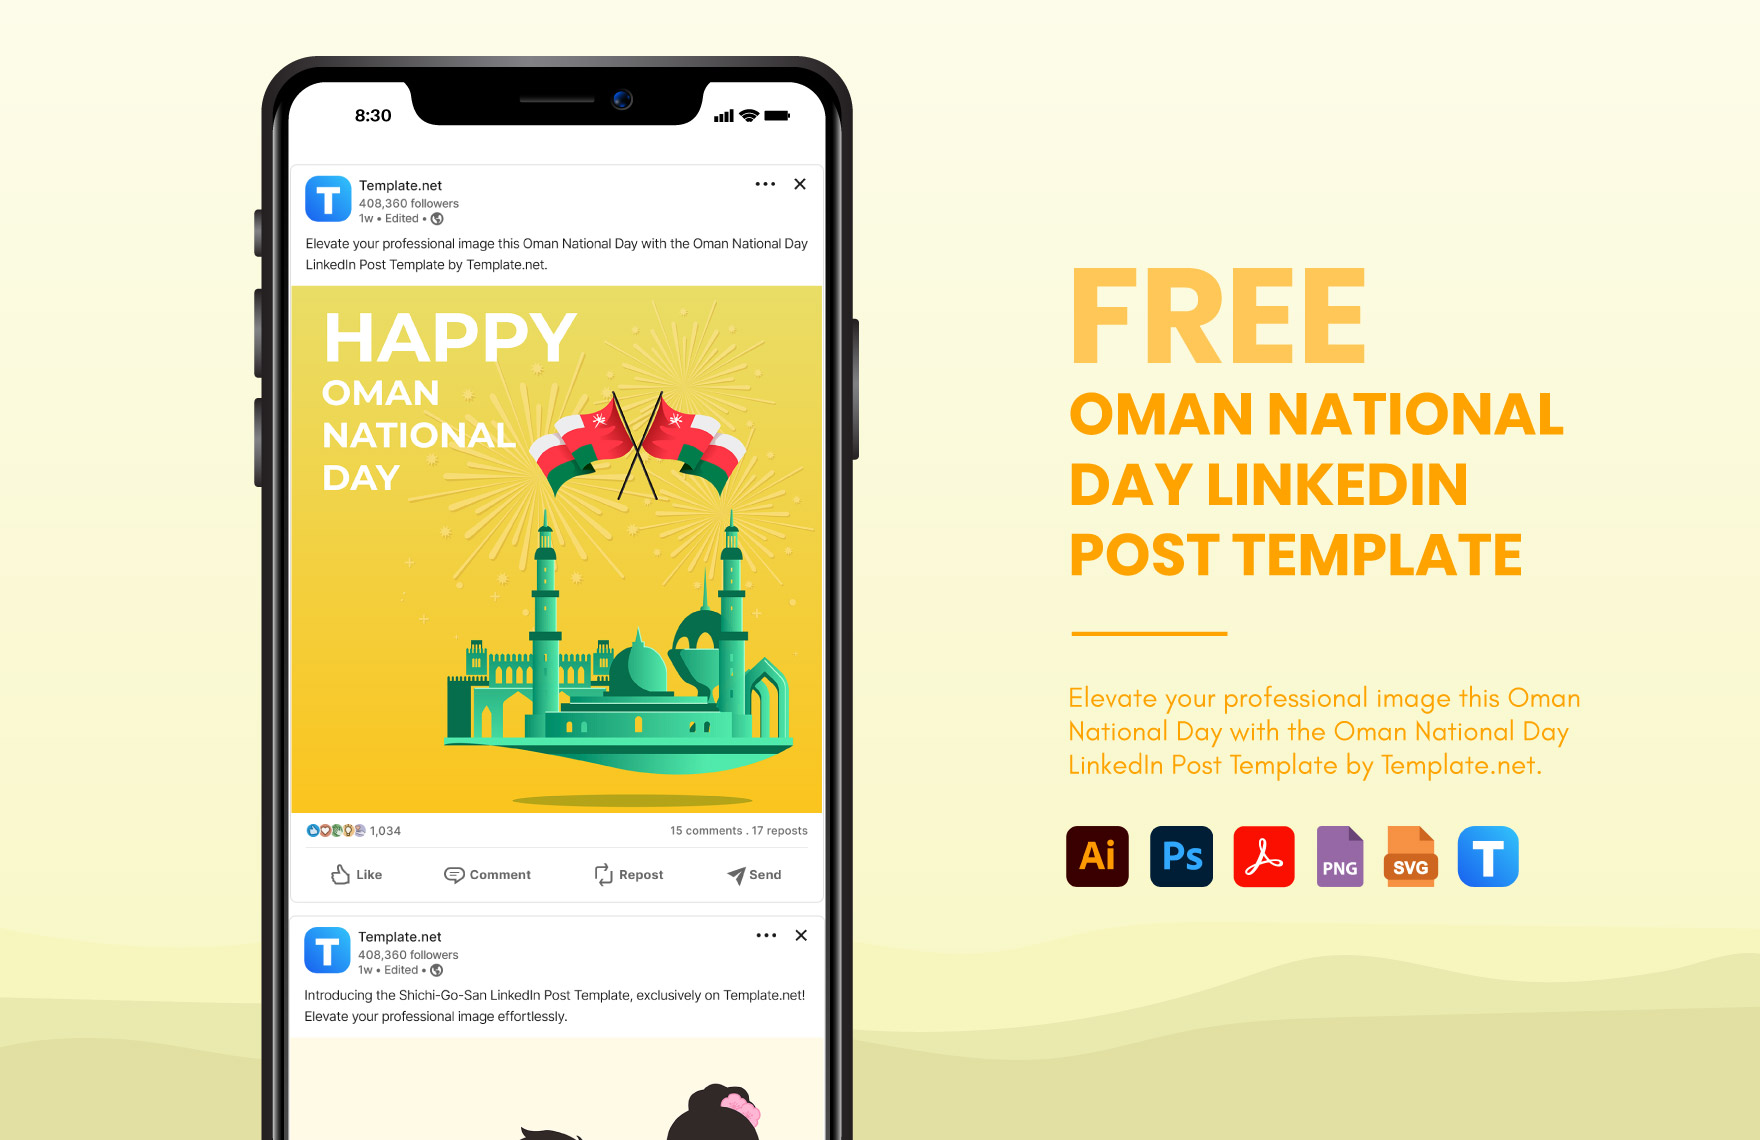 Free Oman National Day LinkedIn Post Template in PDF, Illustrator, PSD, SVG, PNG